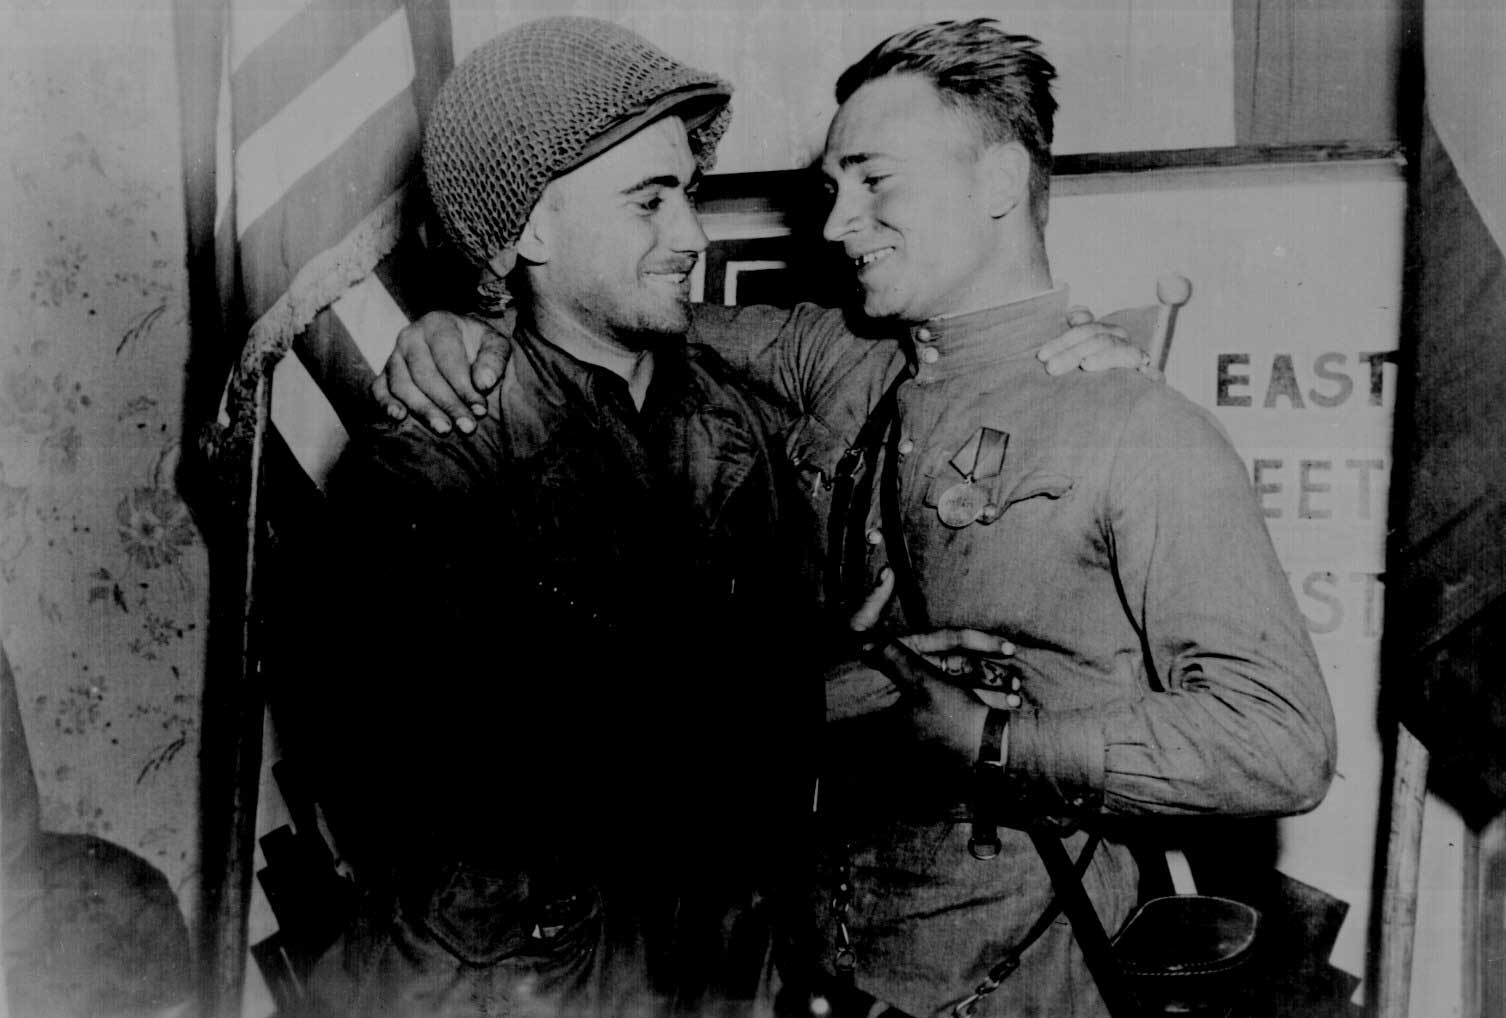 American 2nd Lt. William Robertson and Russian Lt. Alexander Sylvashko met near Torgau, Germany, 25 Apr 1945